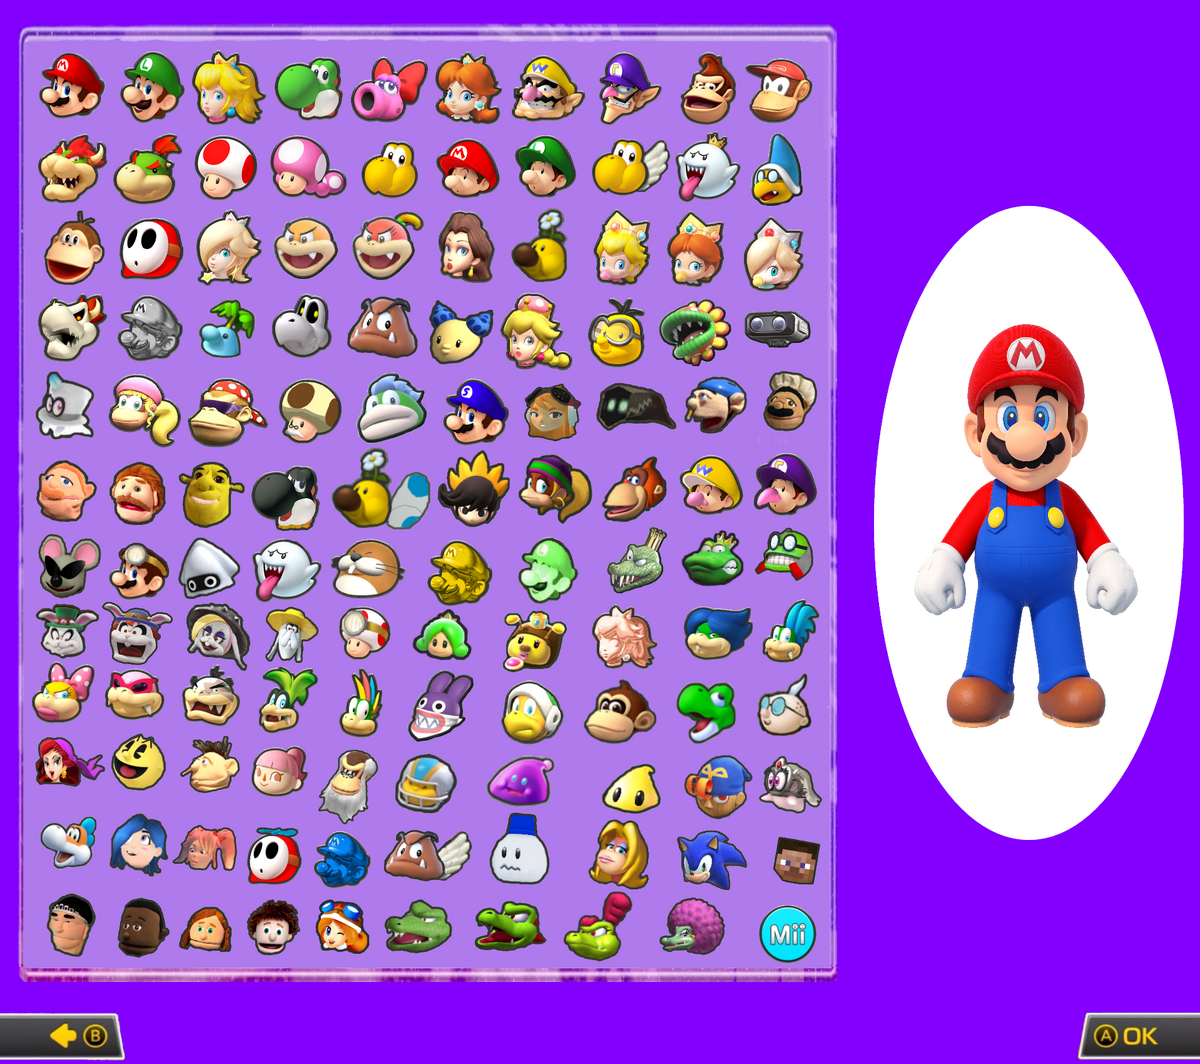 Predicting Mario kart tour: Characters